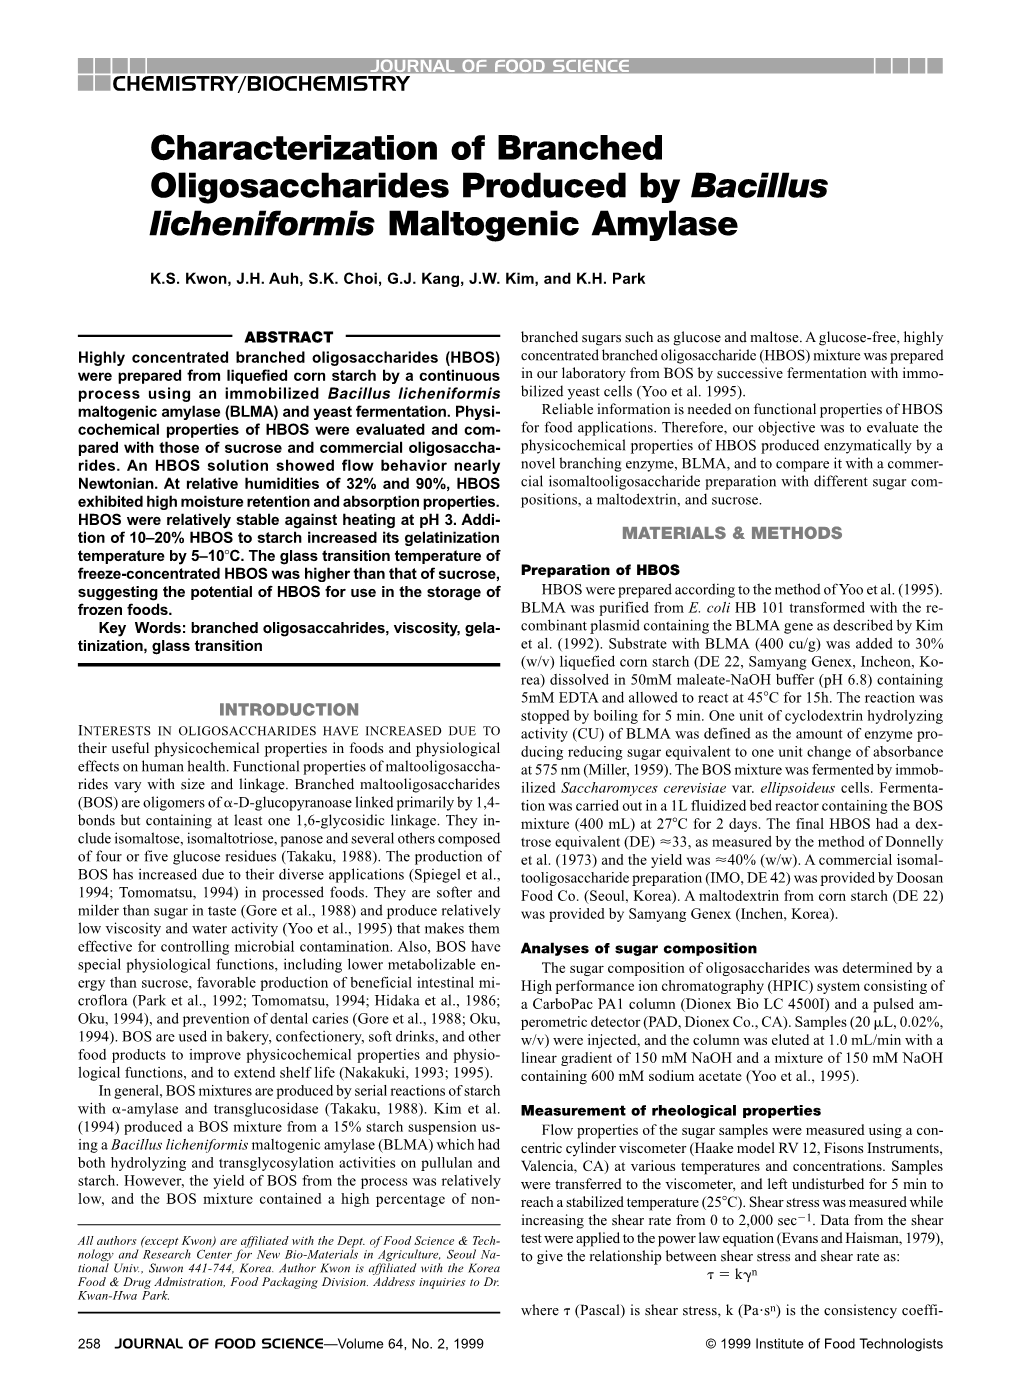 Characterization of Branched Oligosaccharides Produced by Bacillus Licheniformis Maltogenic Amylase